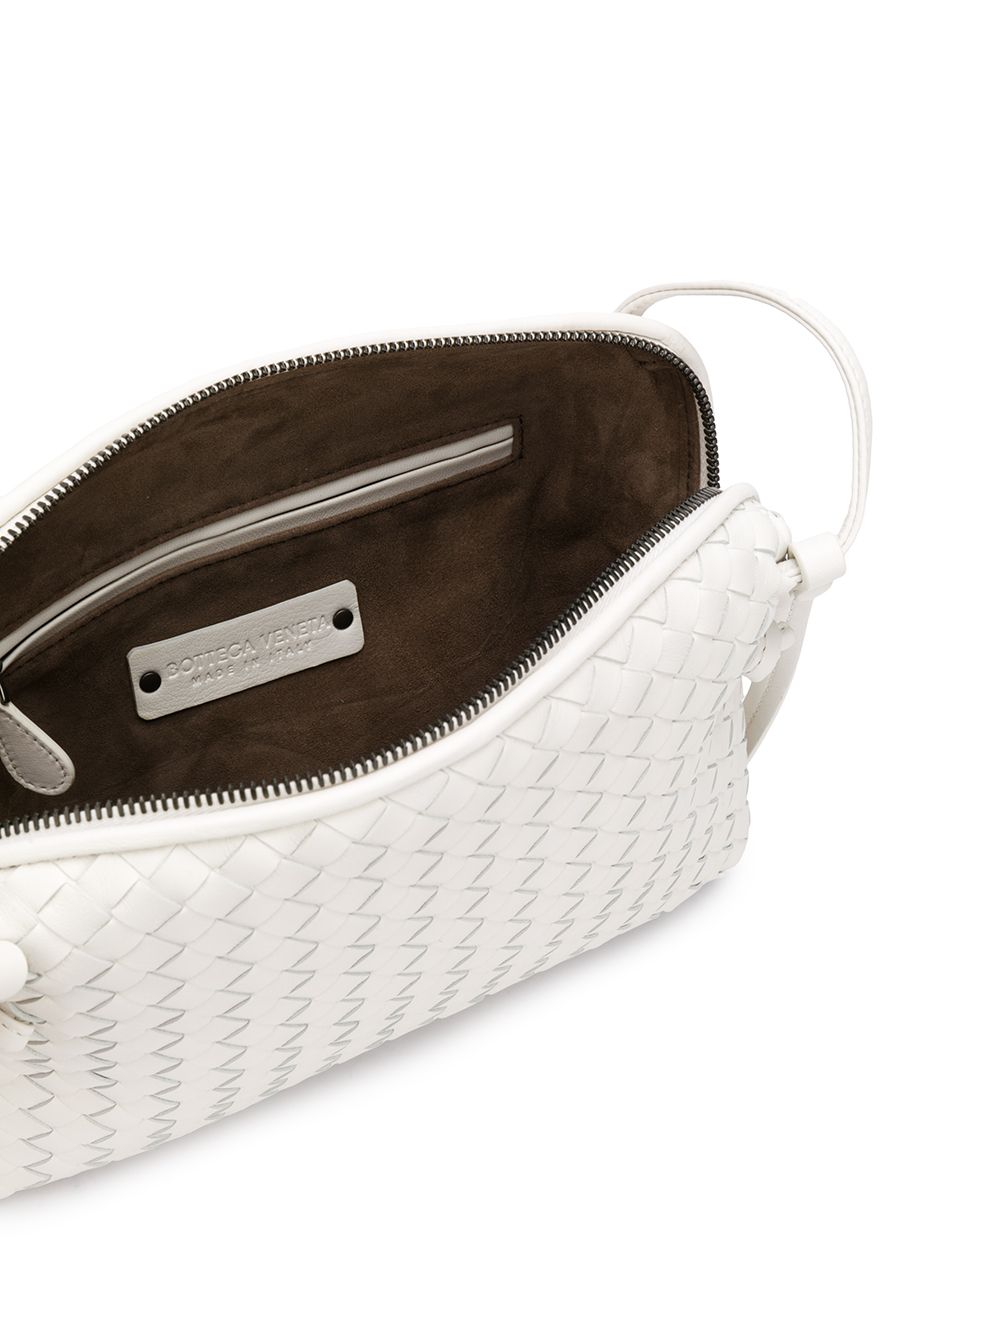 фото Bottega veneta сумка через плечо с плетением intrecciato